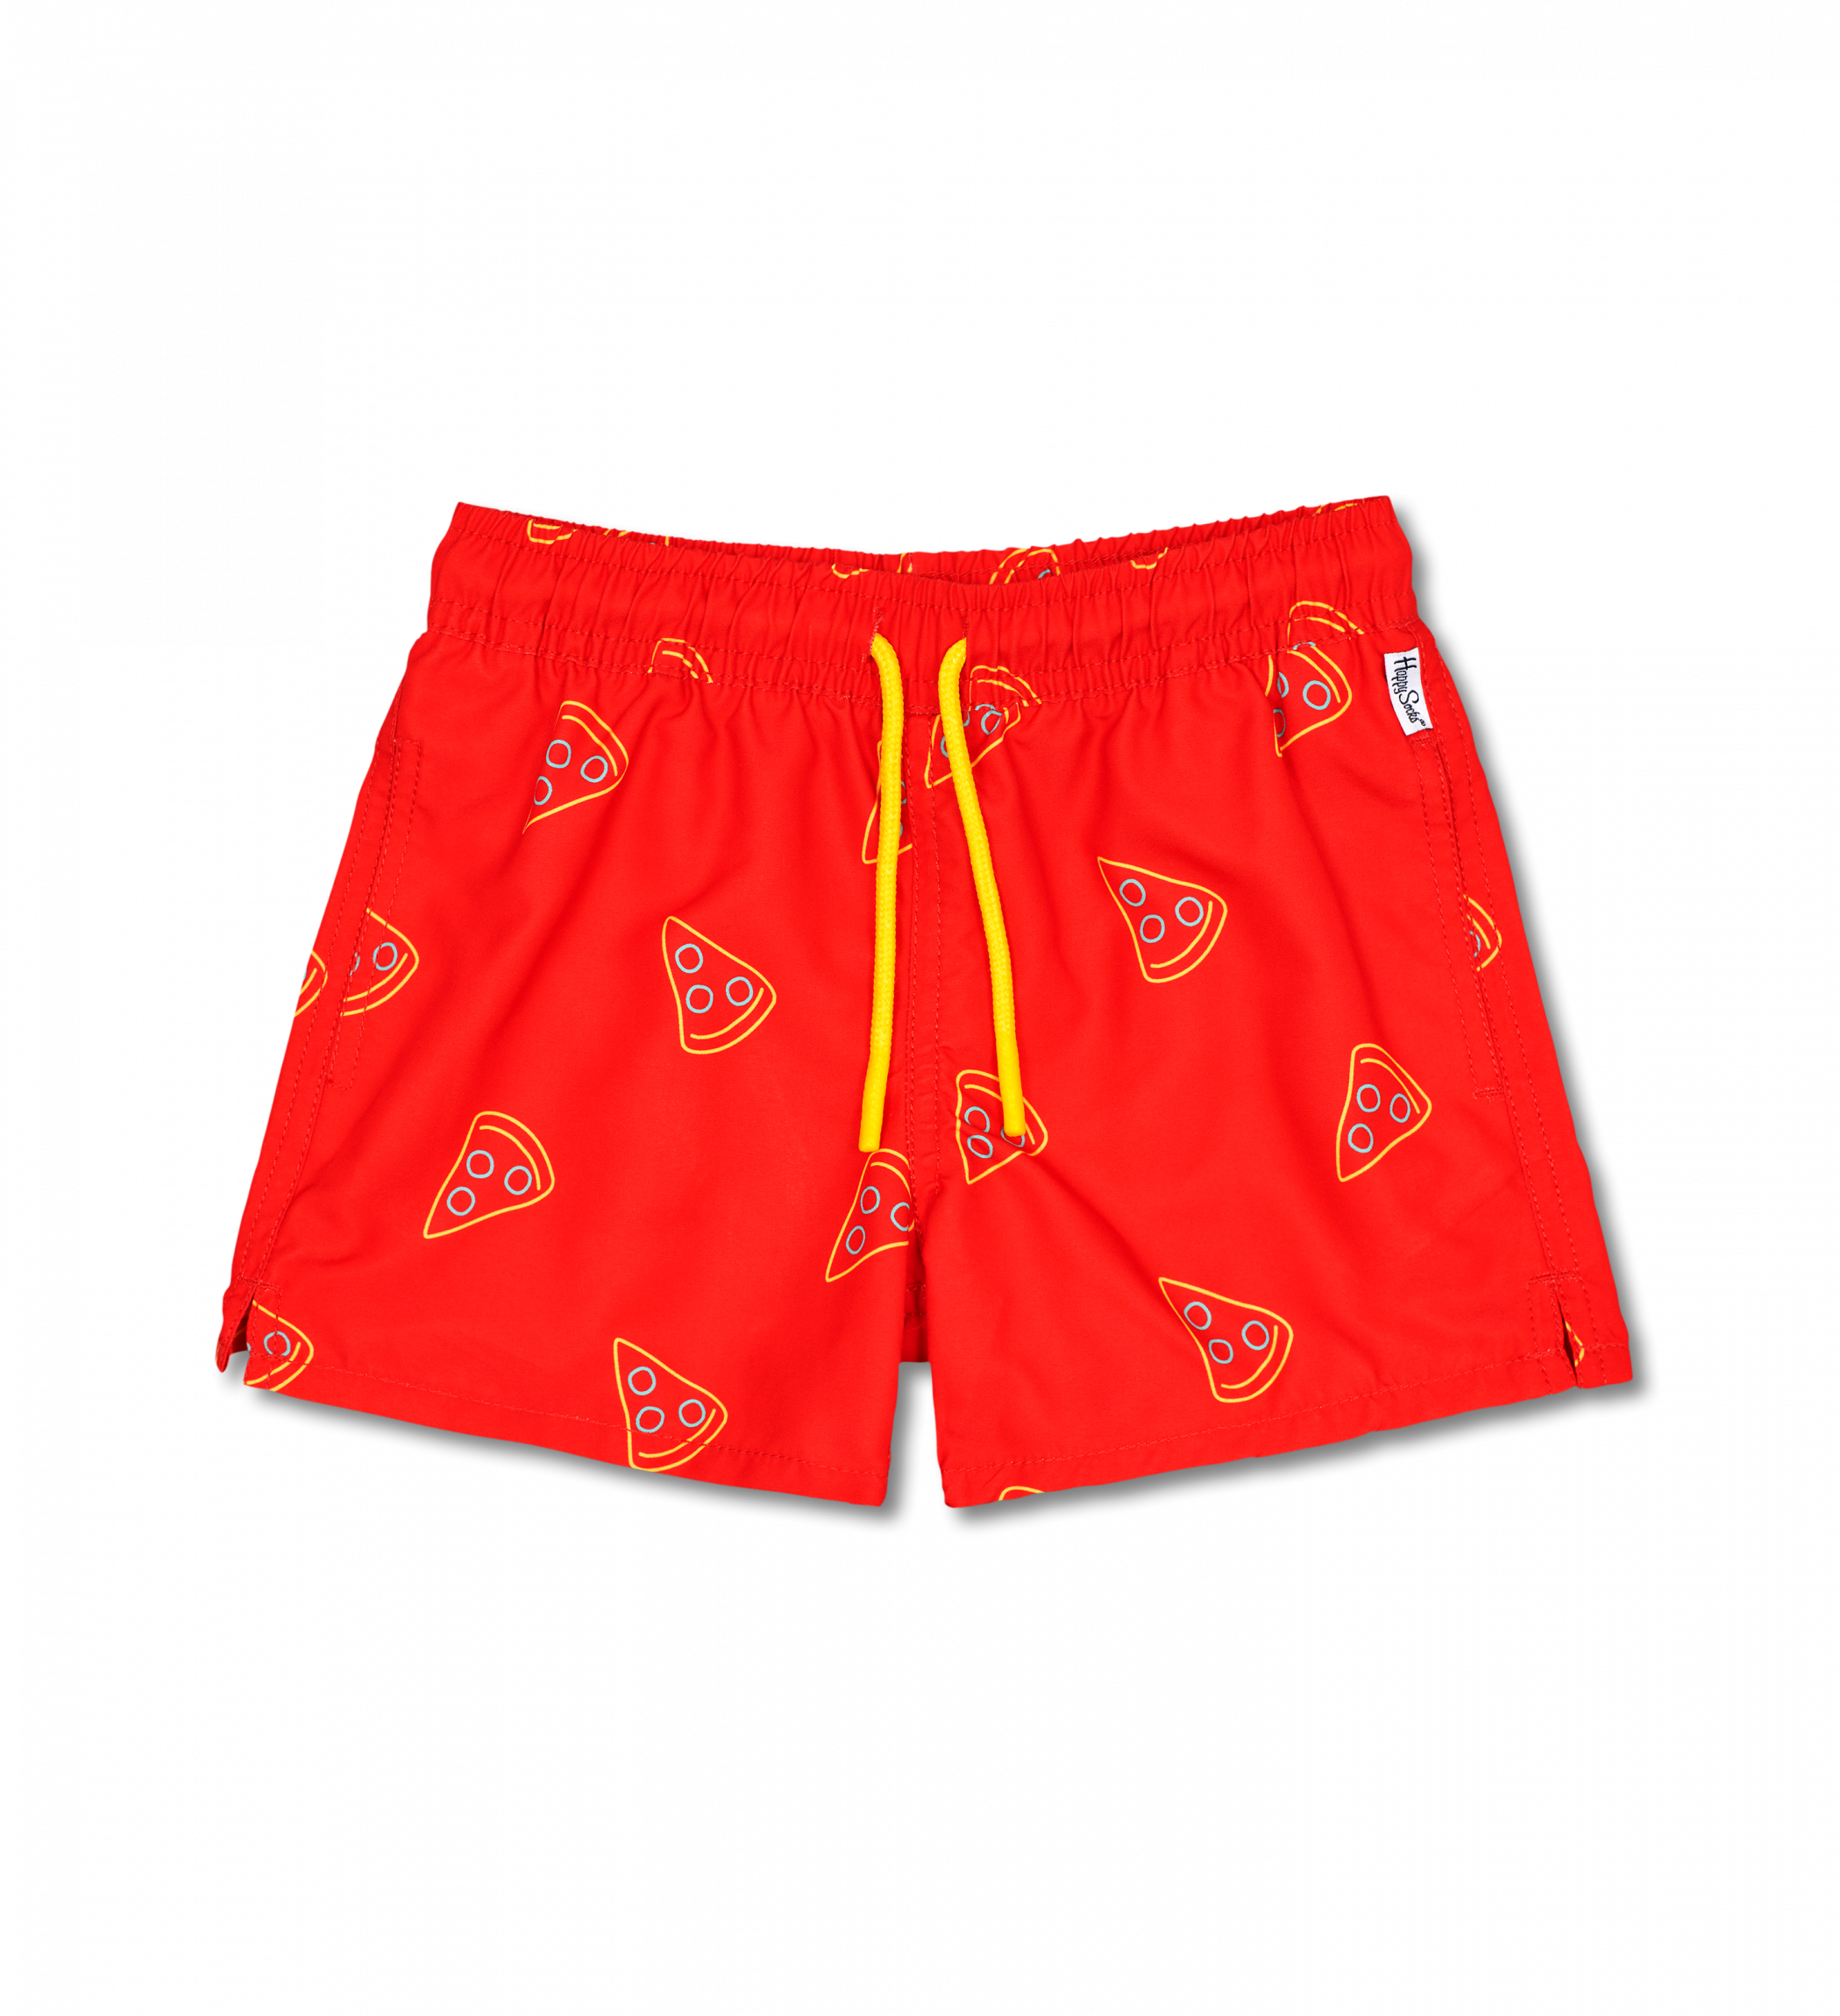 Detské červené plavky Happy Socks, vzor Pizza Slice